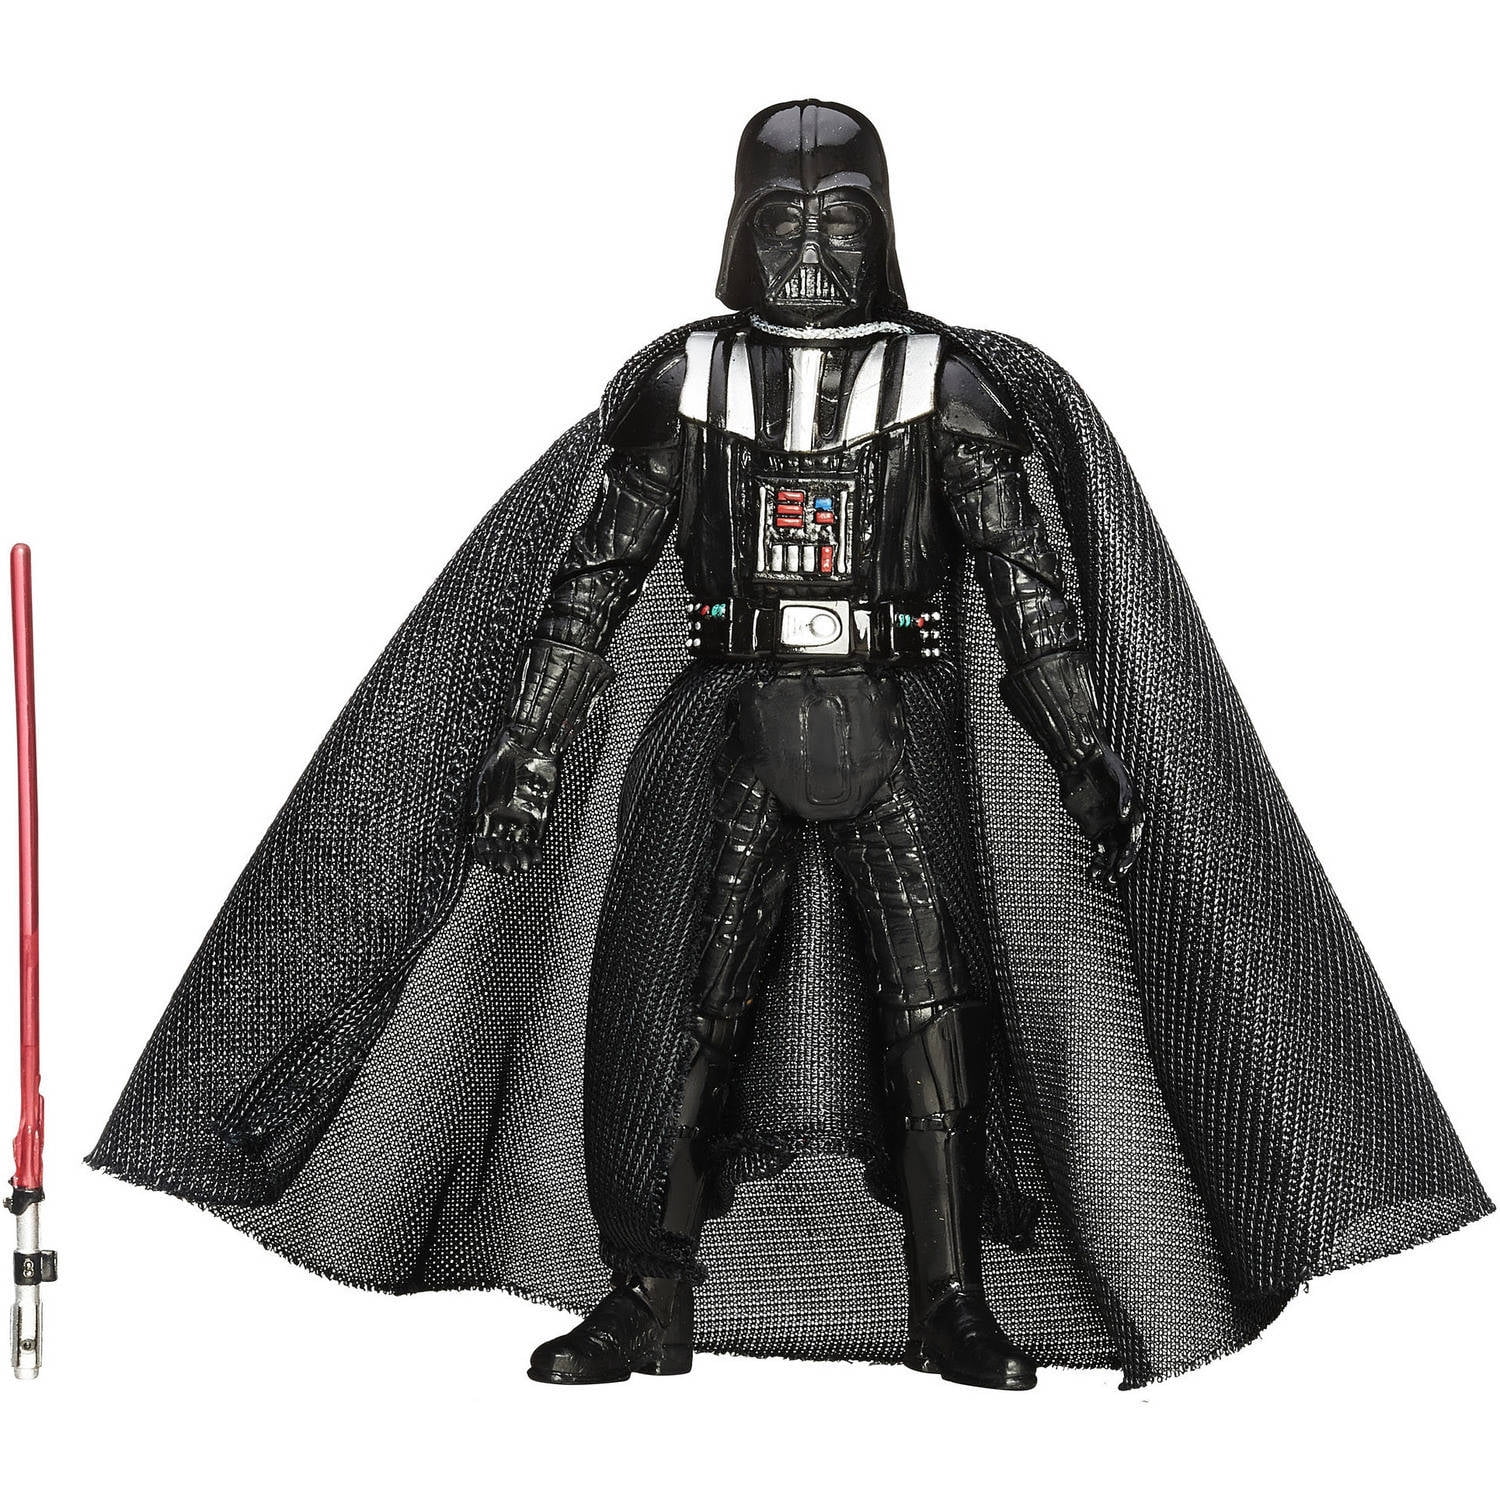 Loose Darth Vader 06 Star Wars 3 3/4" The Black Series Figure Hasbro